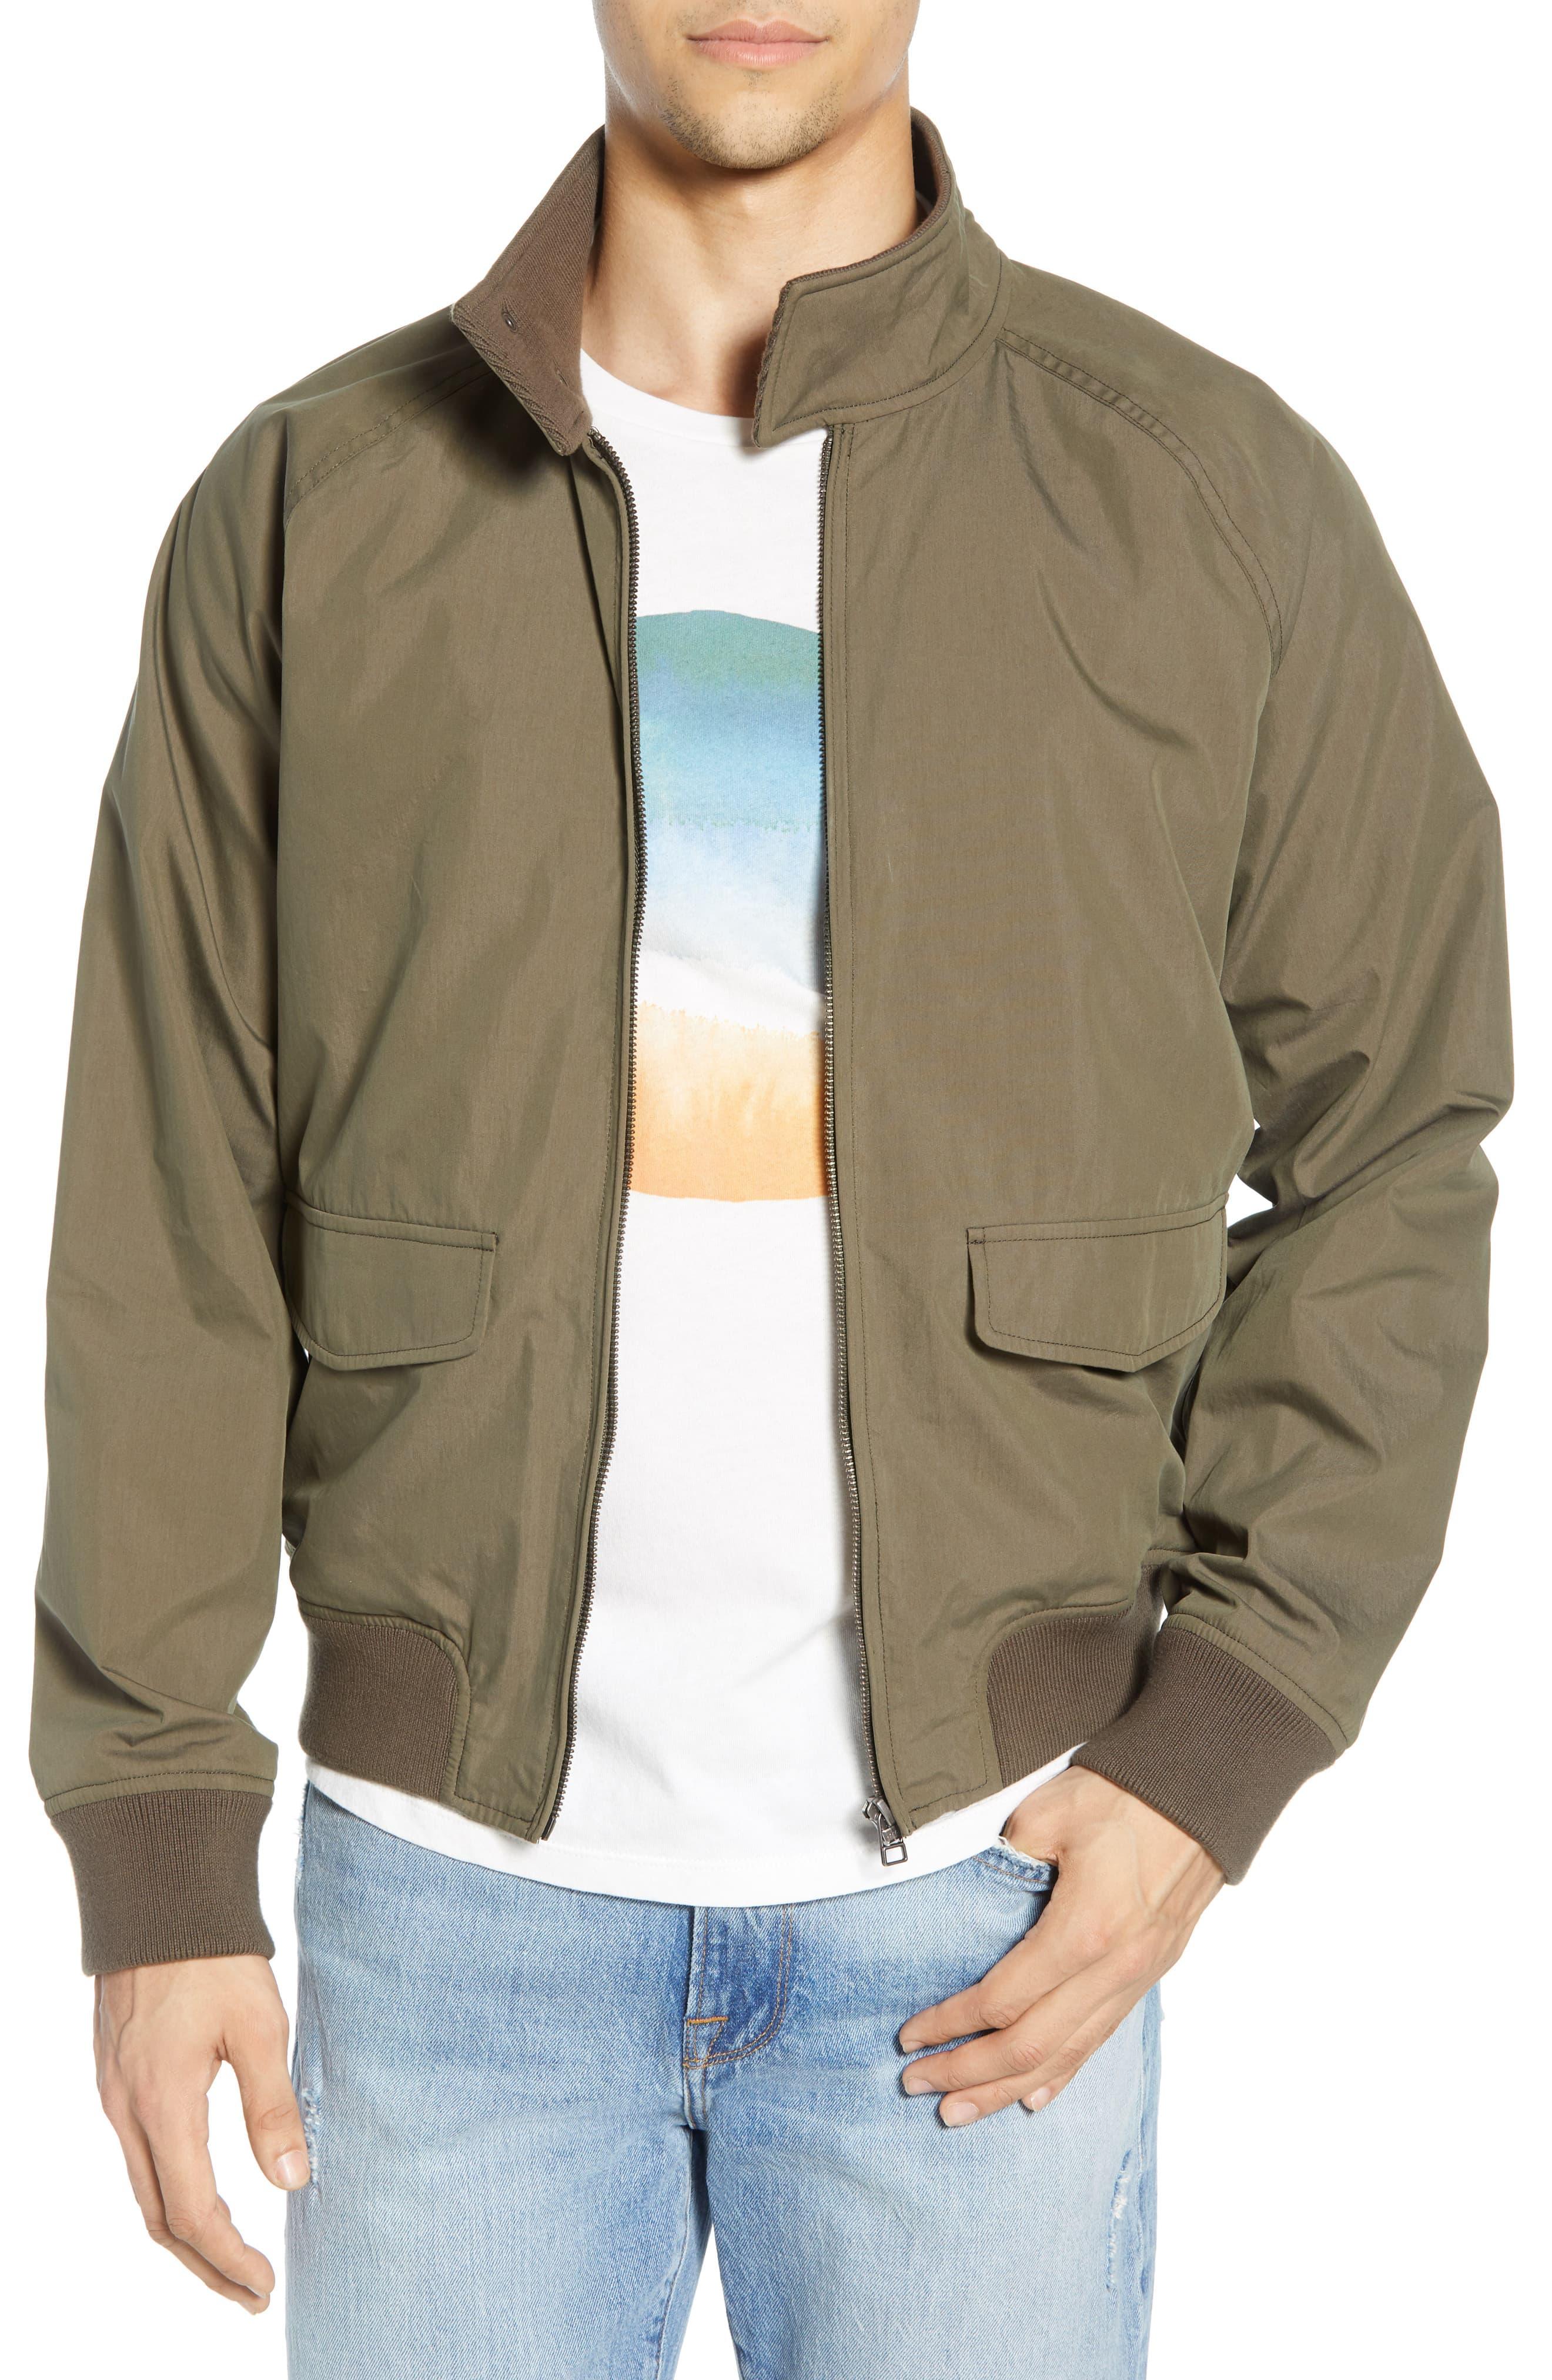 FRAME Cotton Zip Harrington Jacket in Green for Men - Lyst